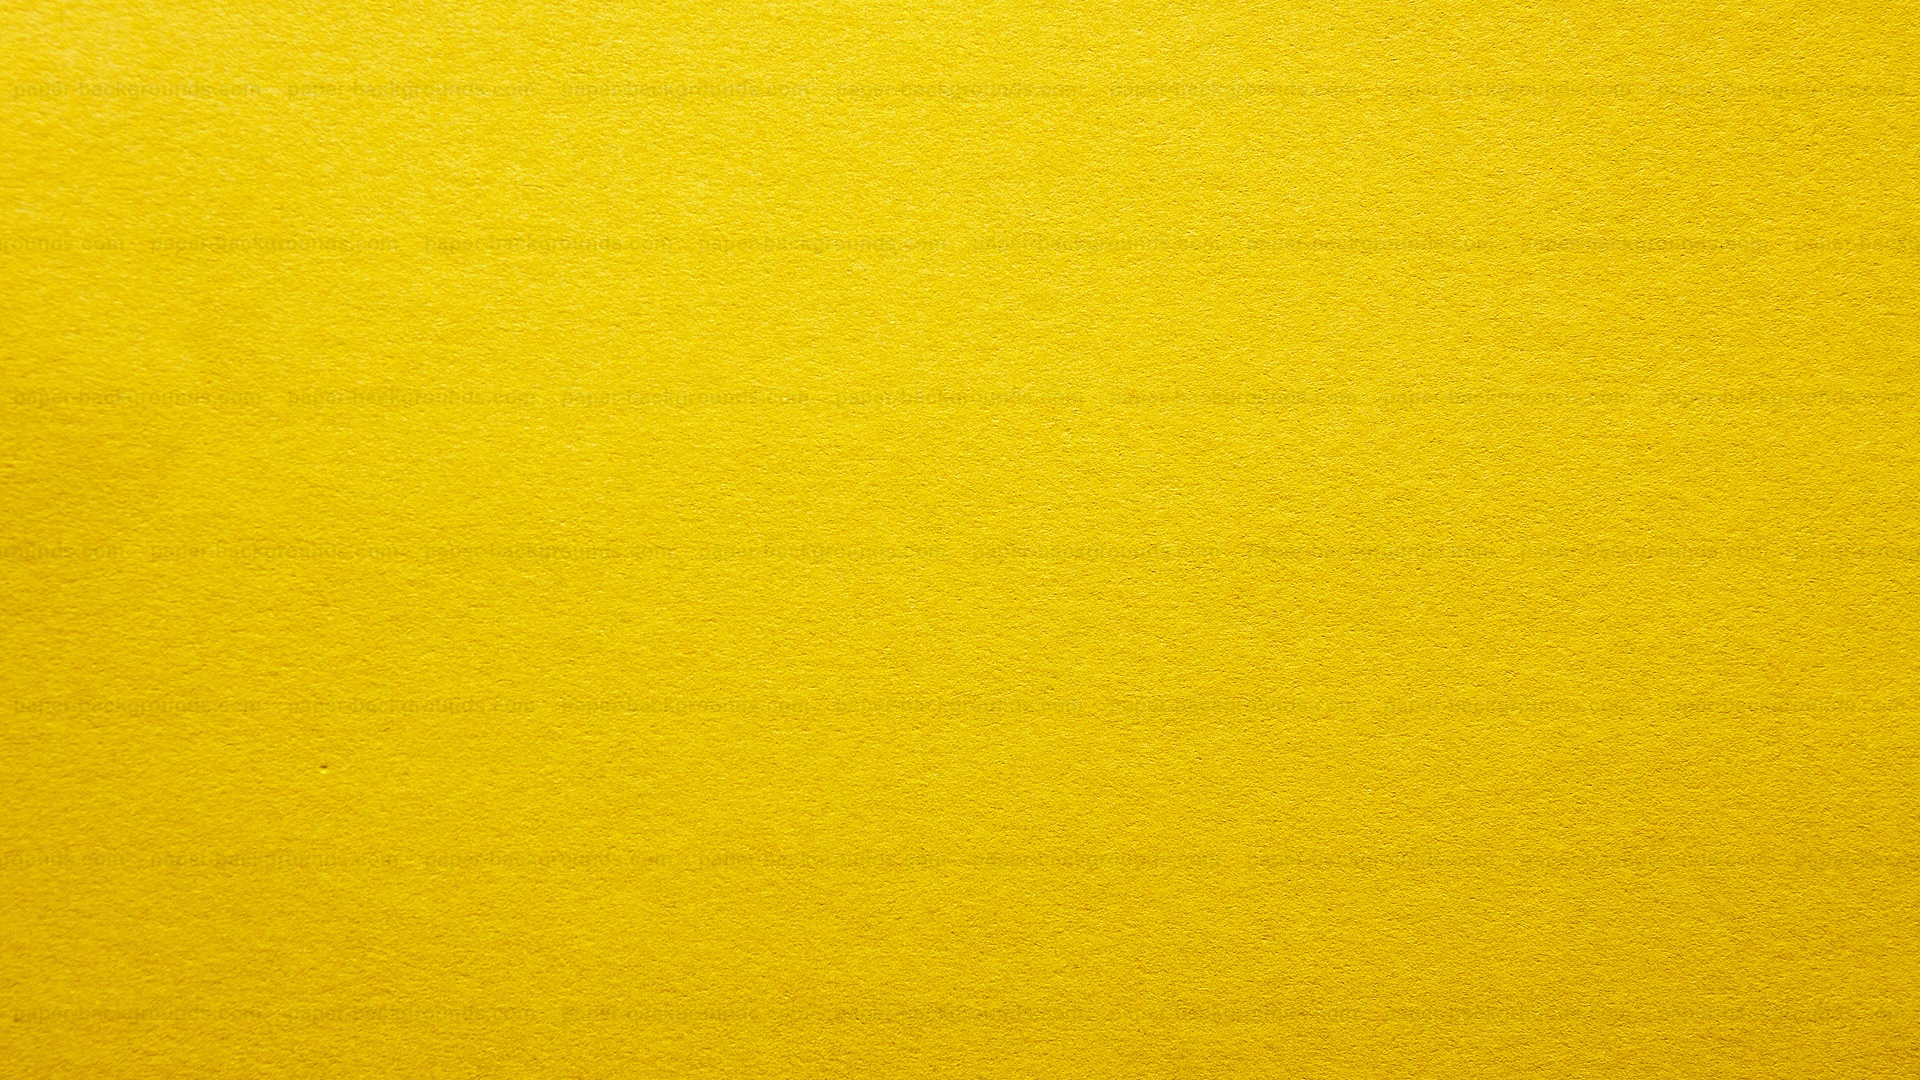 72+ Yellow Background Images on WallpaperSafari